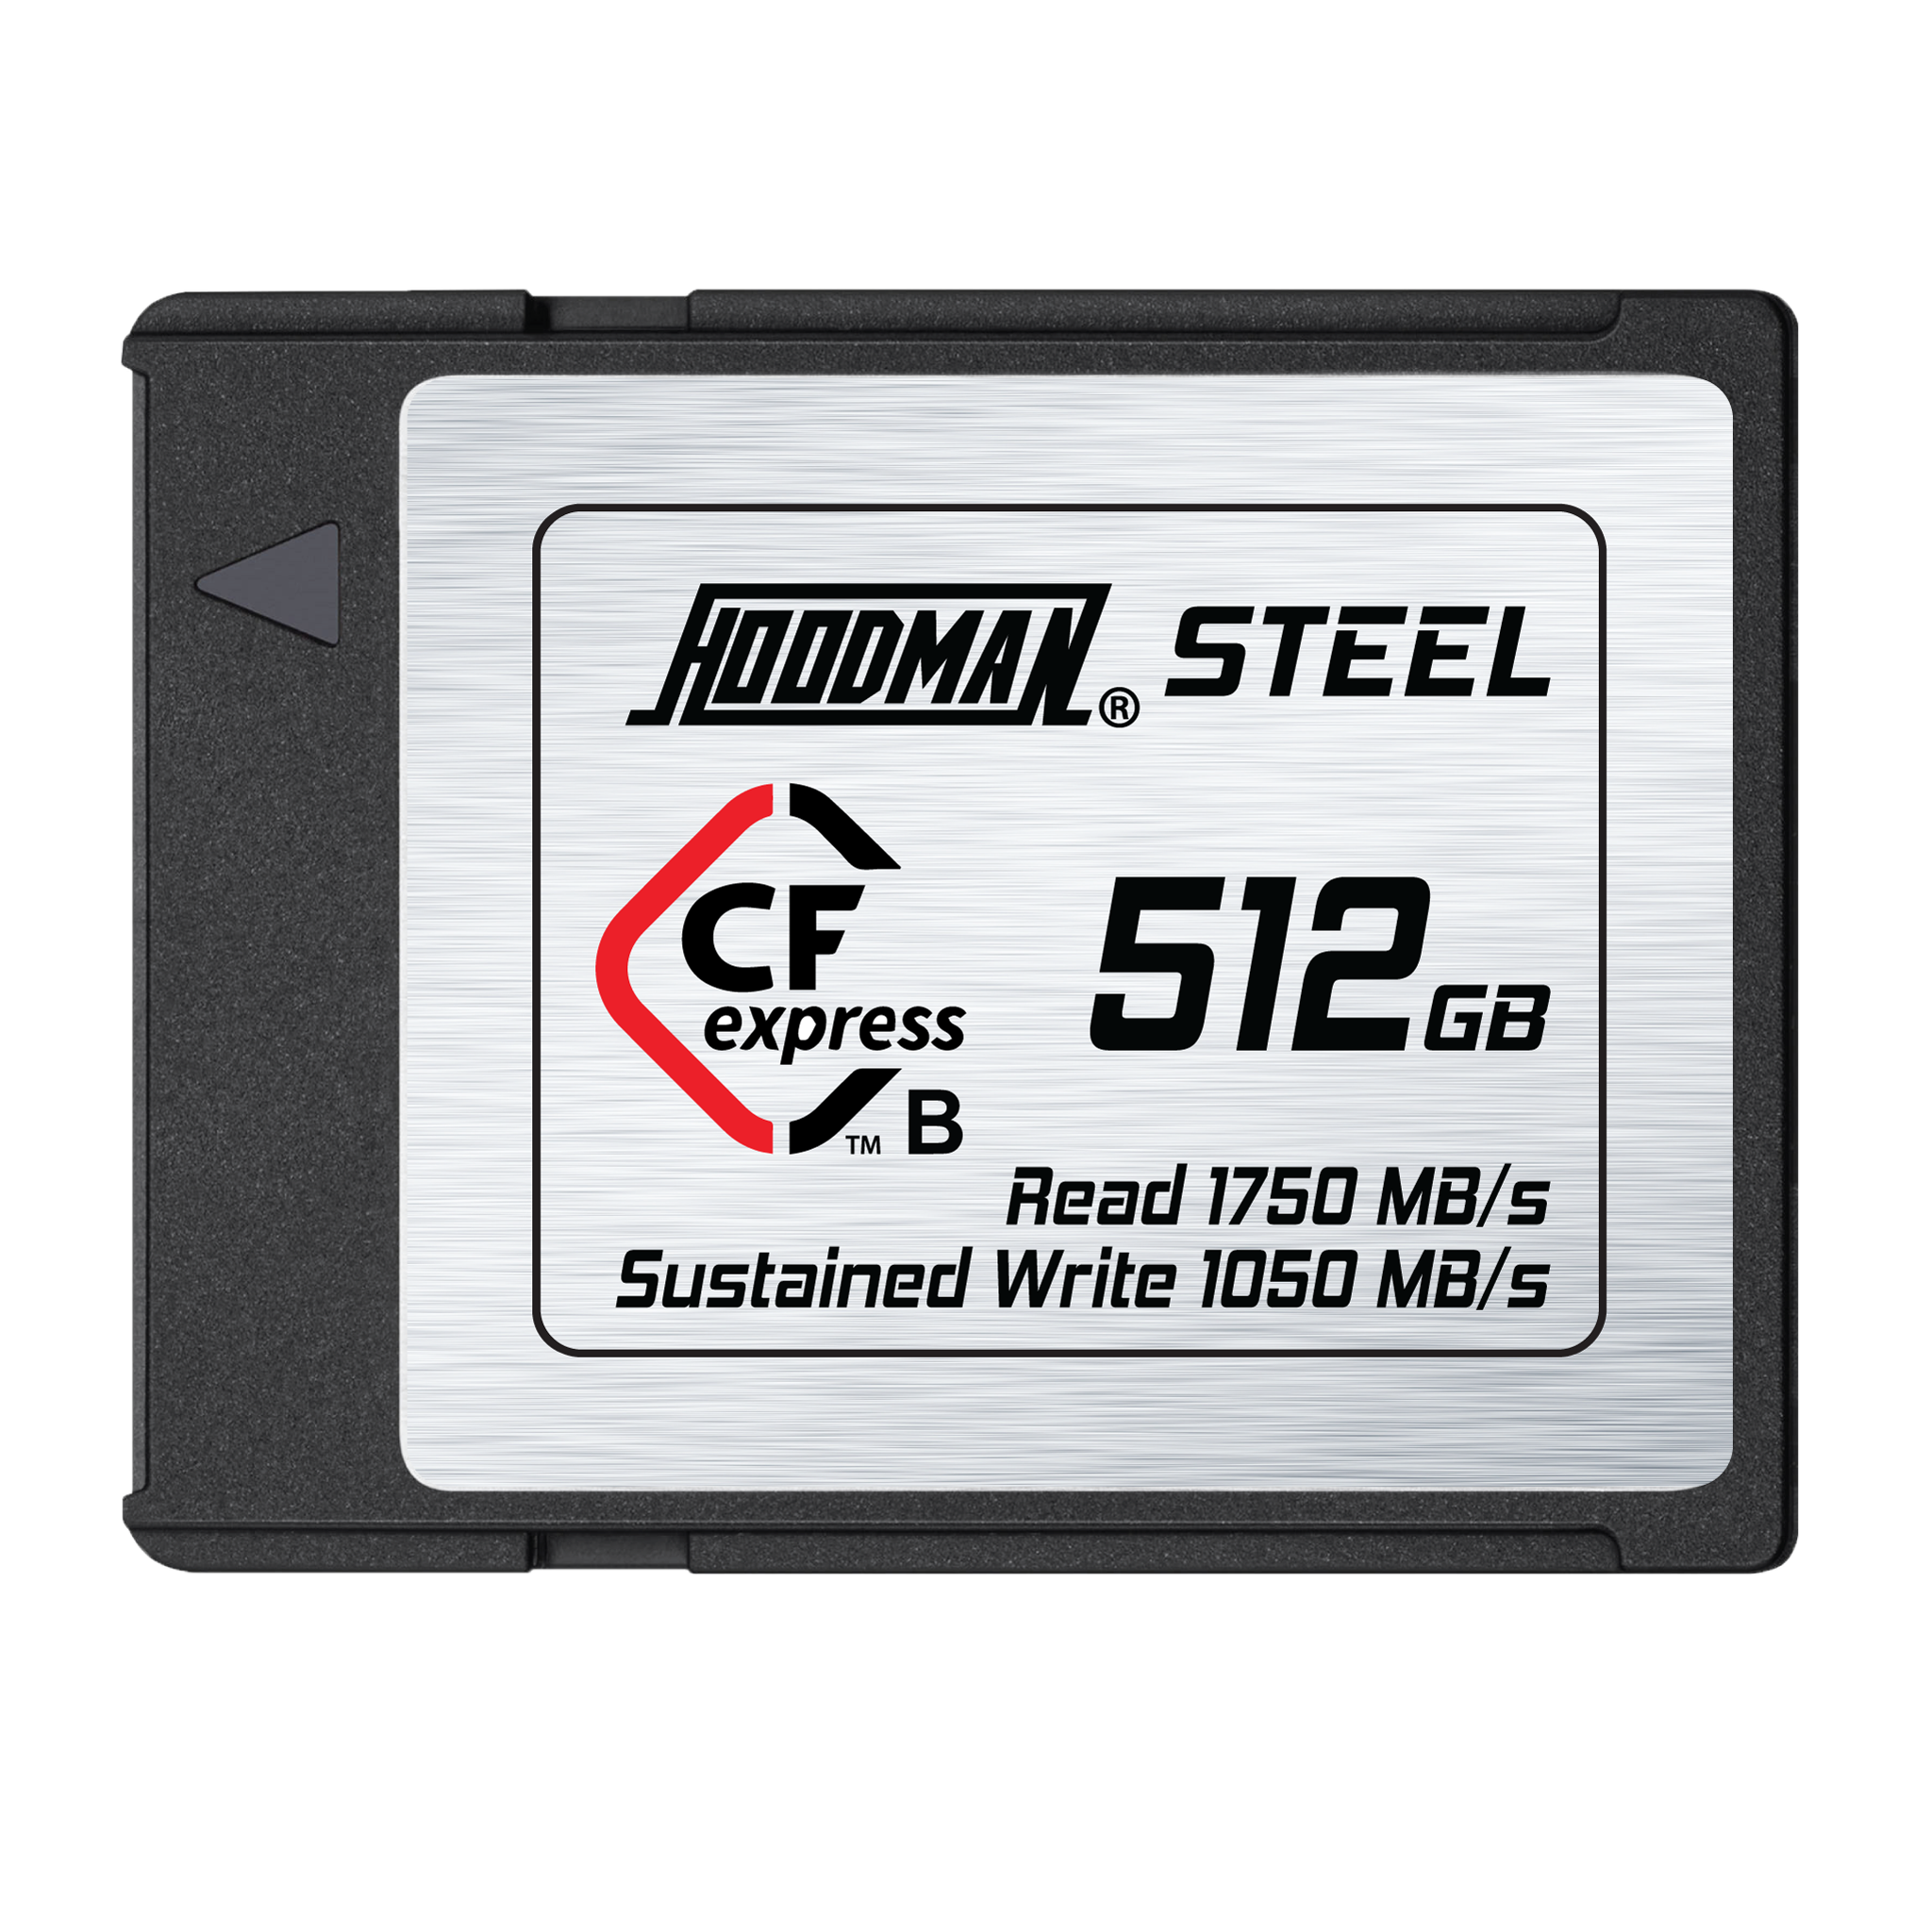 Hoodman STEEL CFExpress Type B 512GB Memory Card V2 - Looking